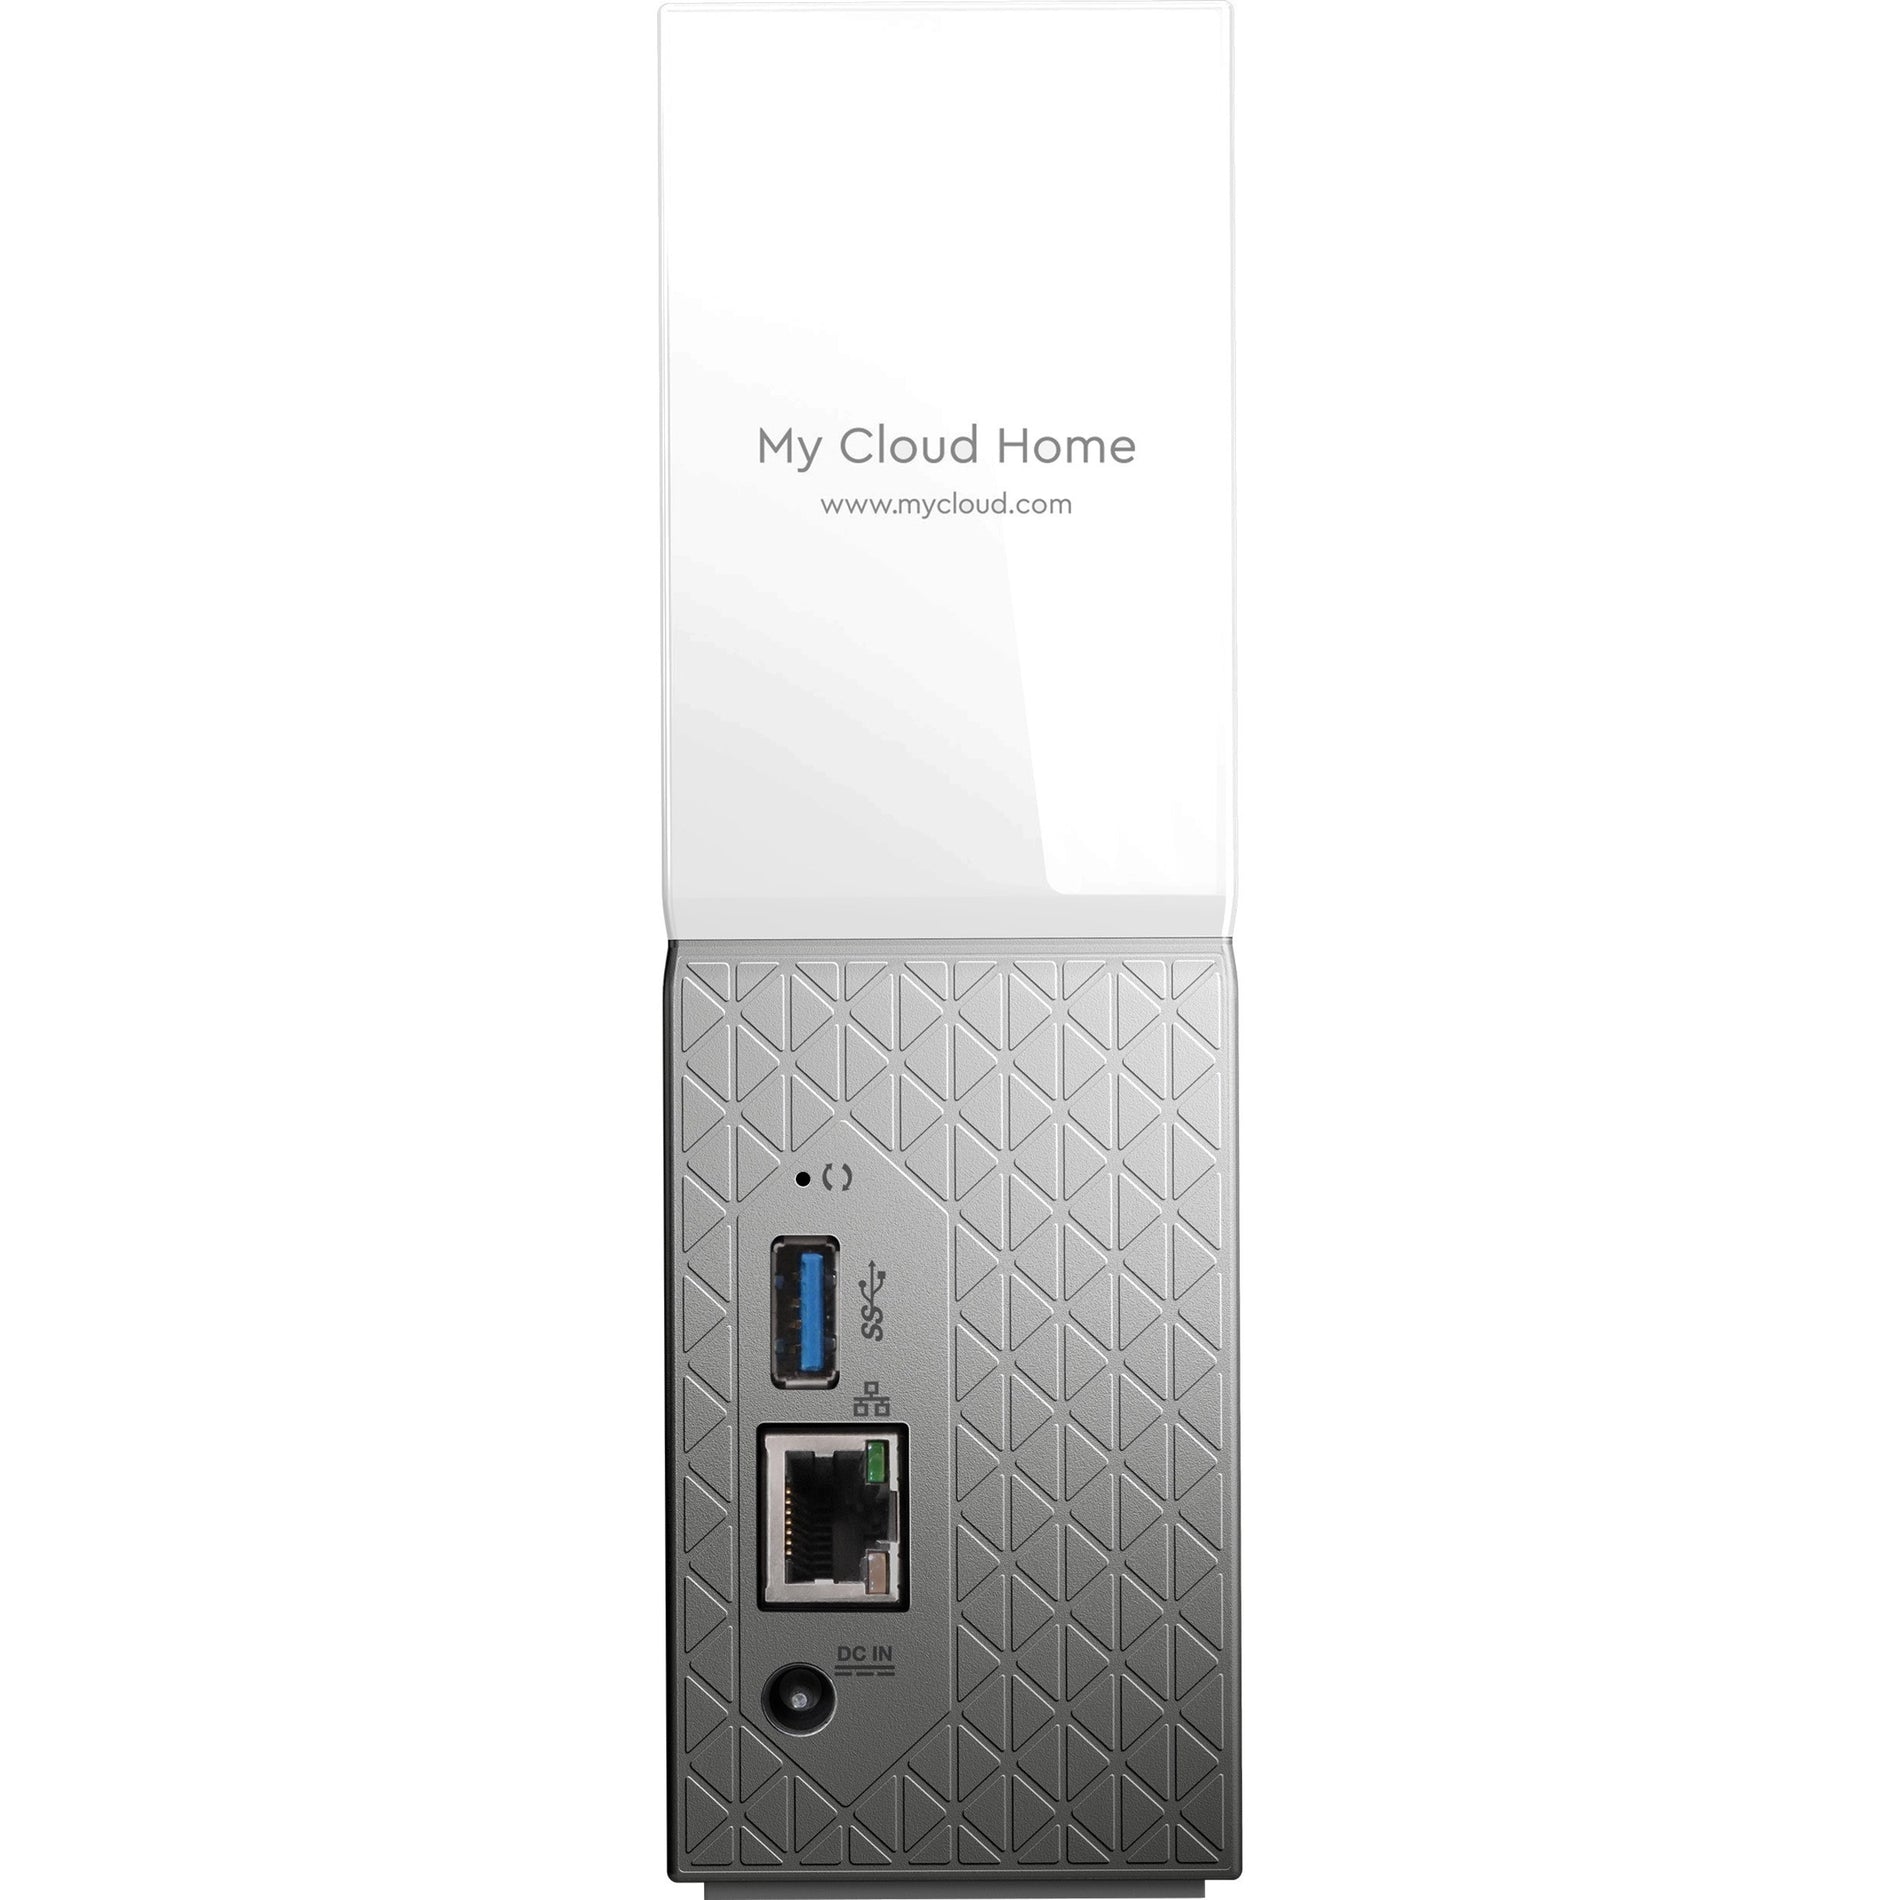 WD WDBVXC0080HWT-NESN My Cloud Home Personal Cloud Storage, 8 TB Capacity, 2 Year Warranty